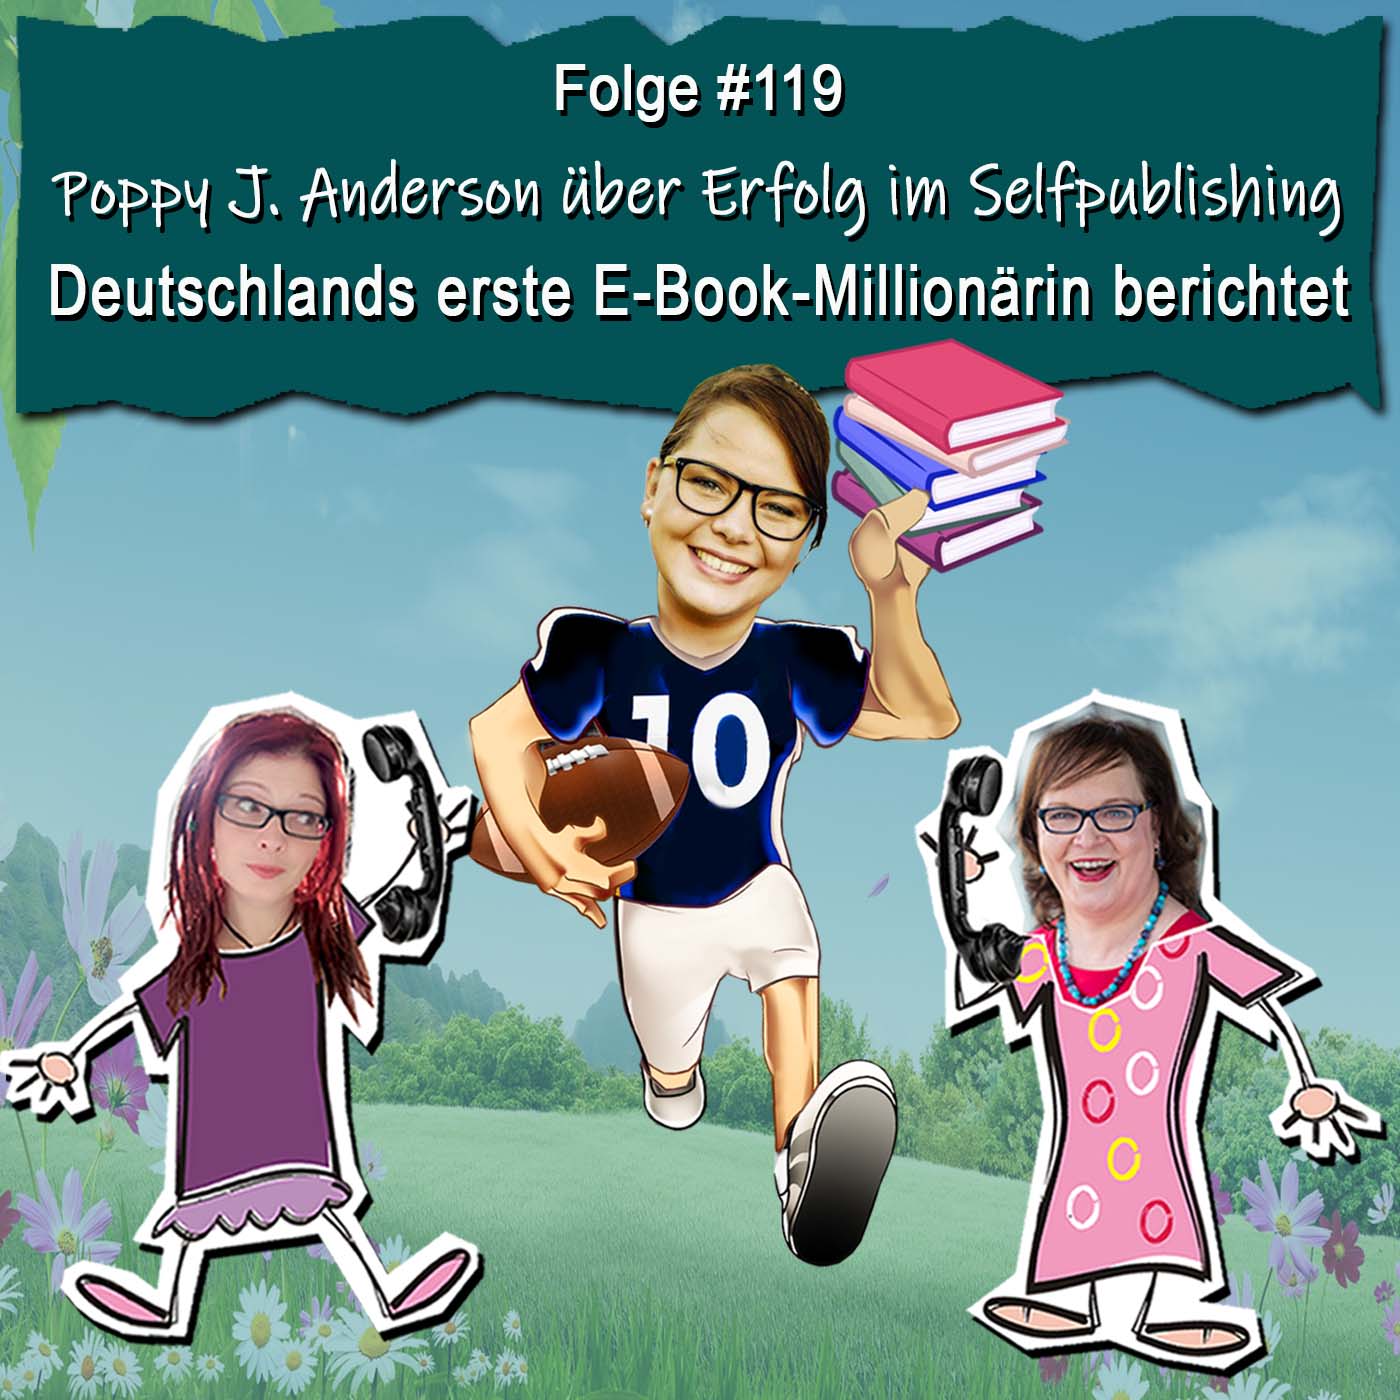 DZVDT 119 - Poppy J. Anderson über Erfolg im Selfpublishing - Deutschlands erste E-Book-Millionärin berichtet